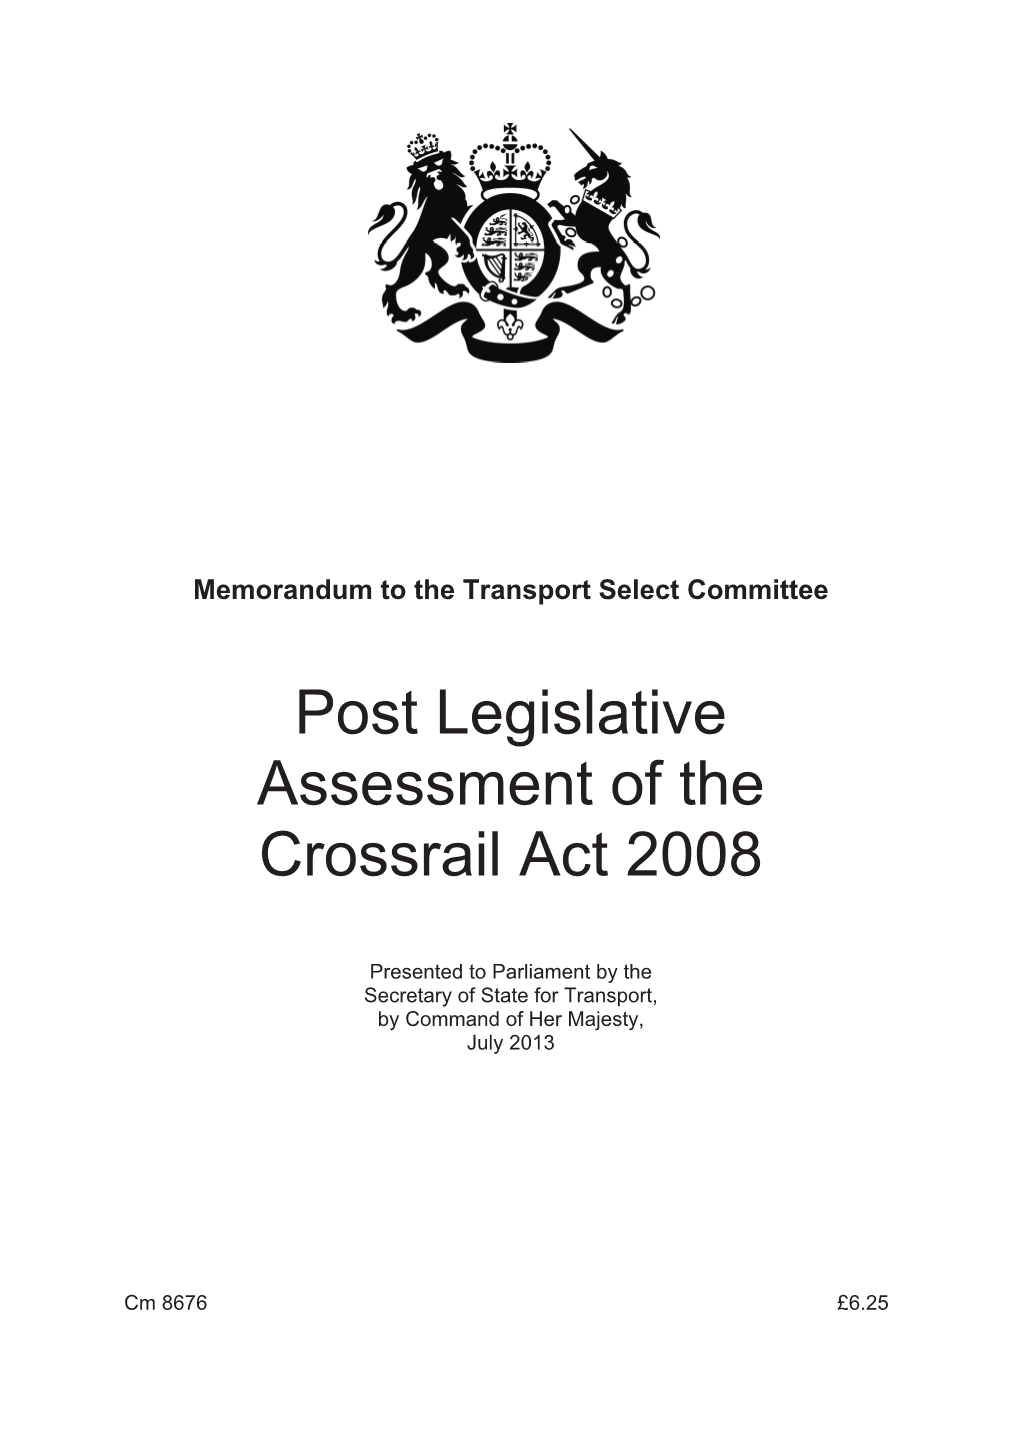 Post Legislative Assessment of the Crossrail Act 2008